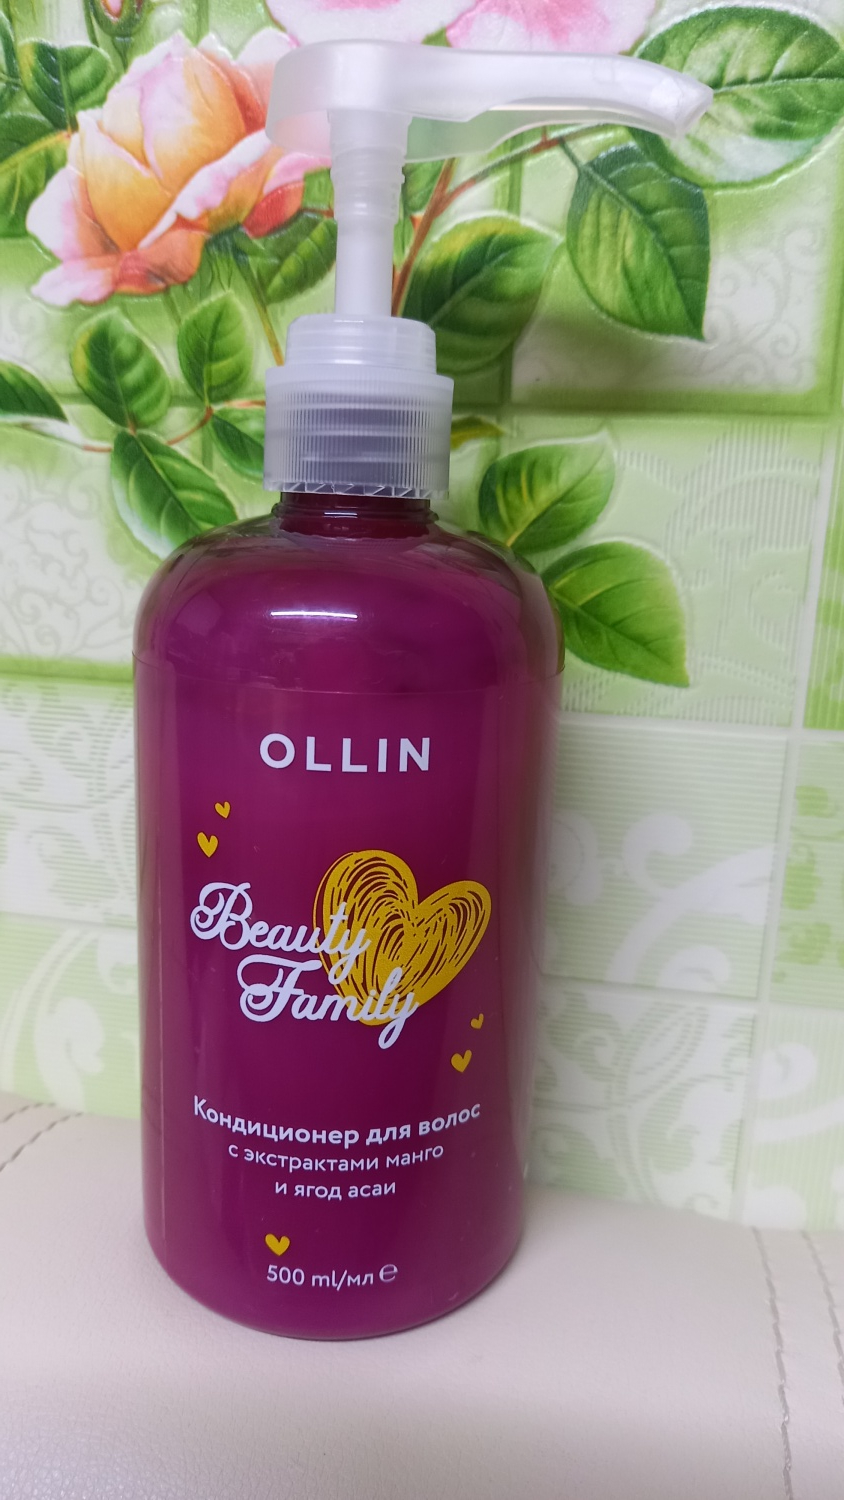 Кондиционер для волос Ollin Beauty family с экстрактами манго и ягод асаи  фото